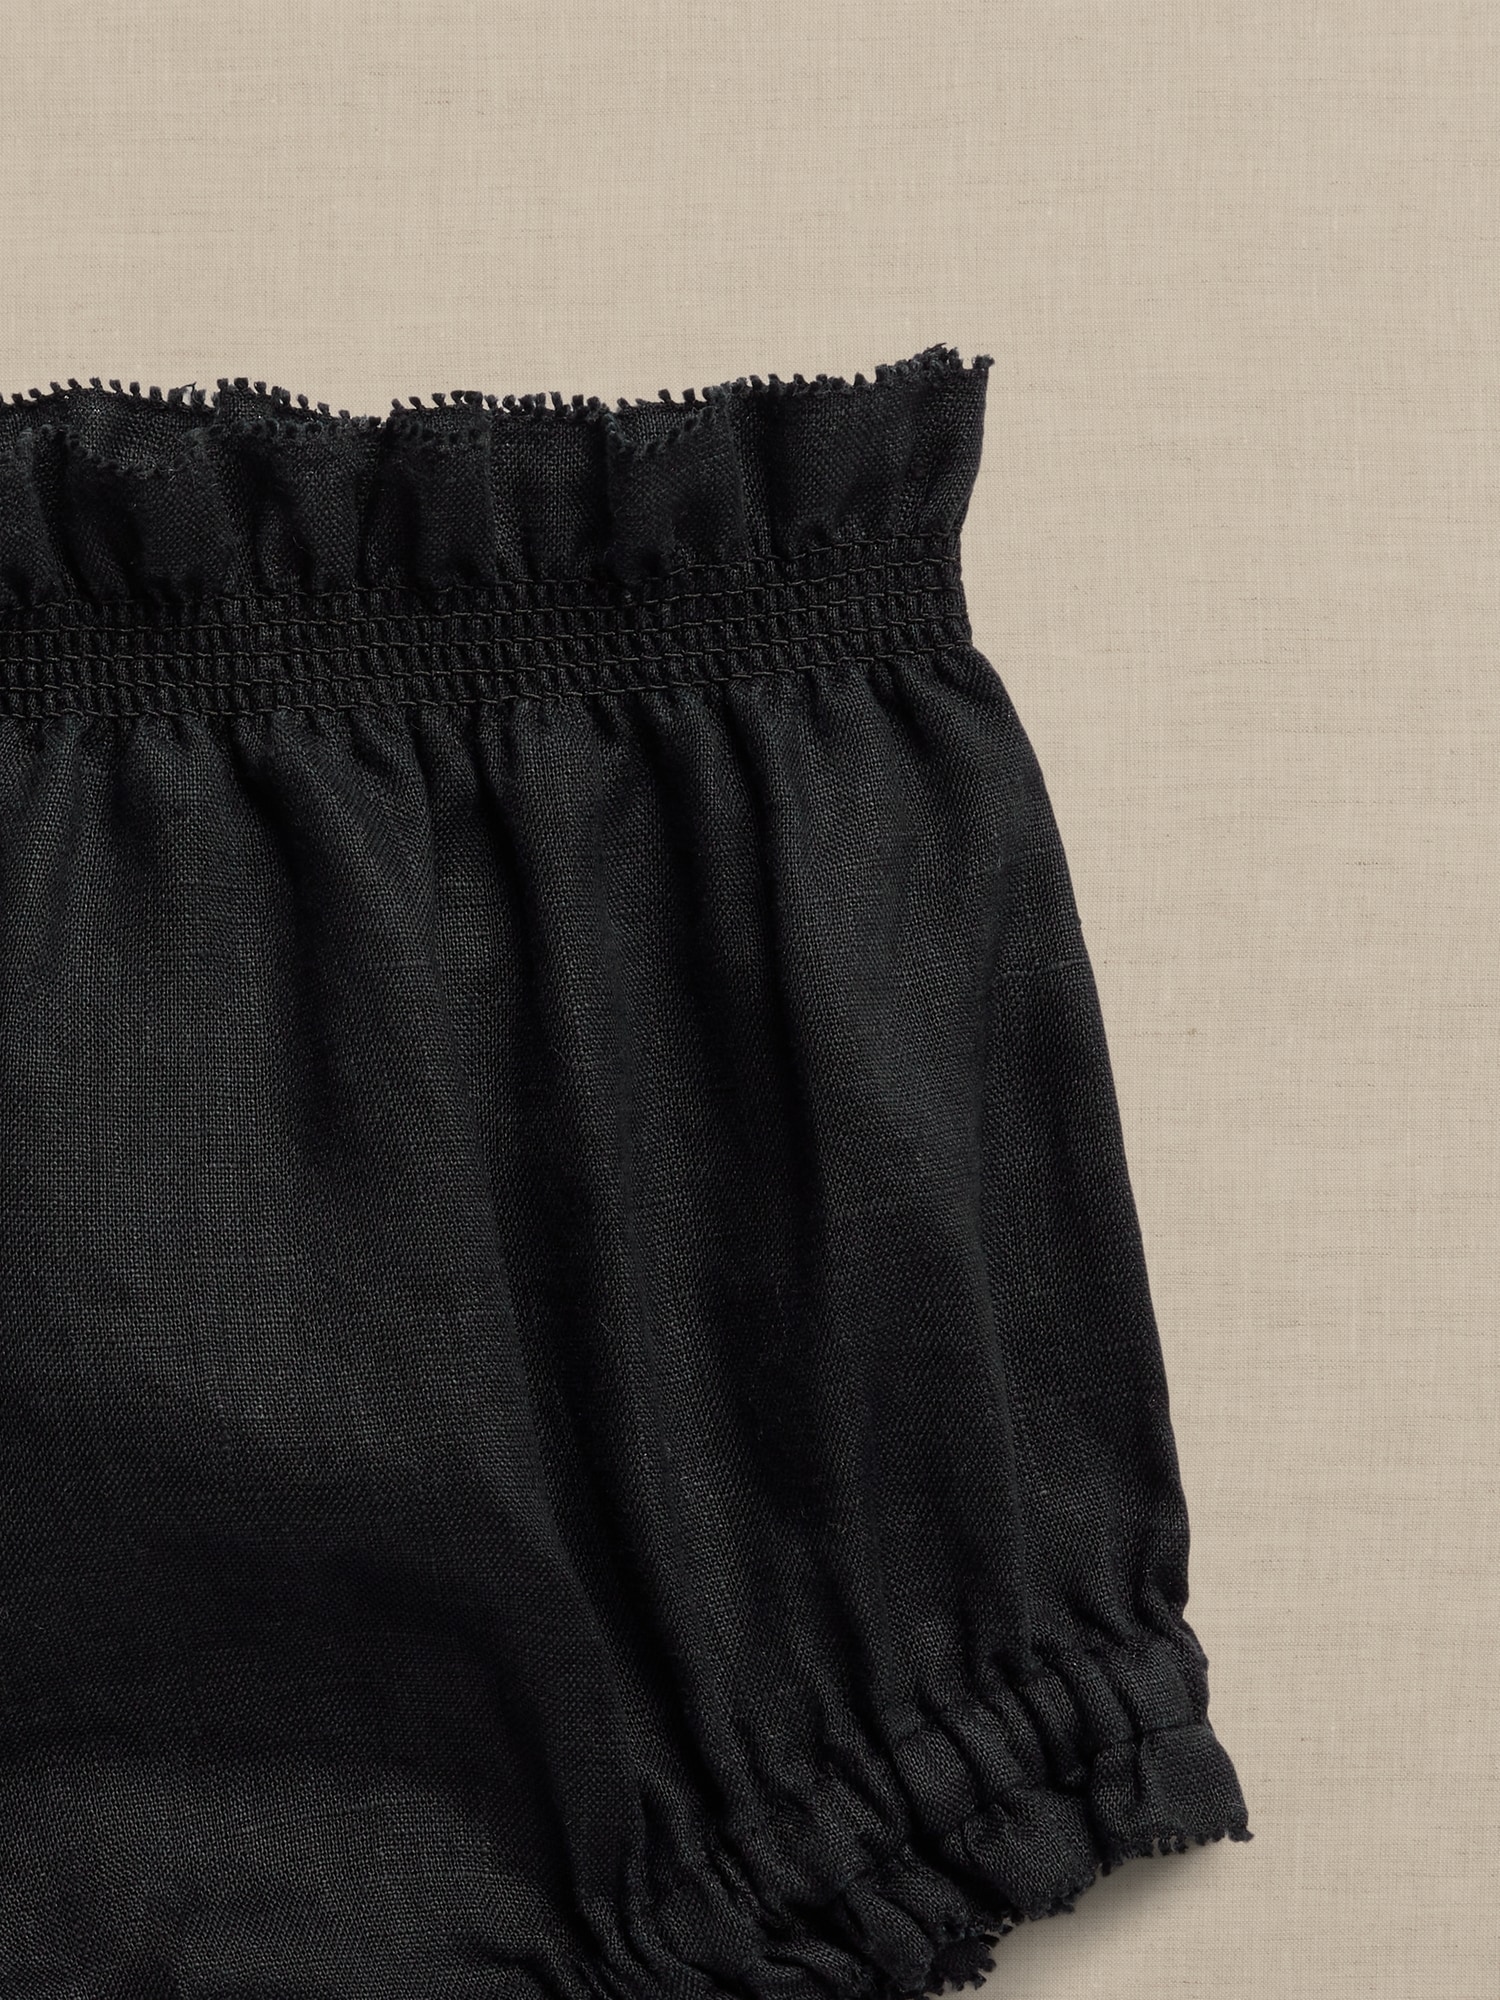 Scully RangeWear Womens Black 100% Cotton Ruffle Crochet Lace Pants  Bloomers M 